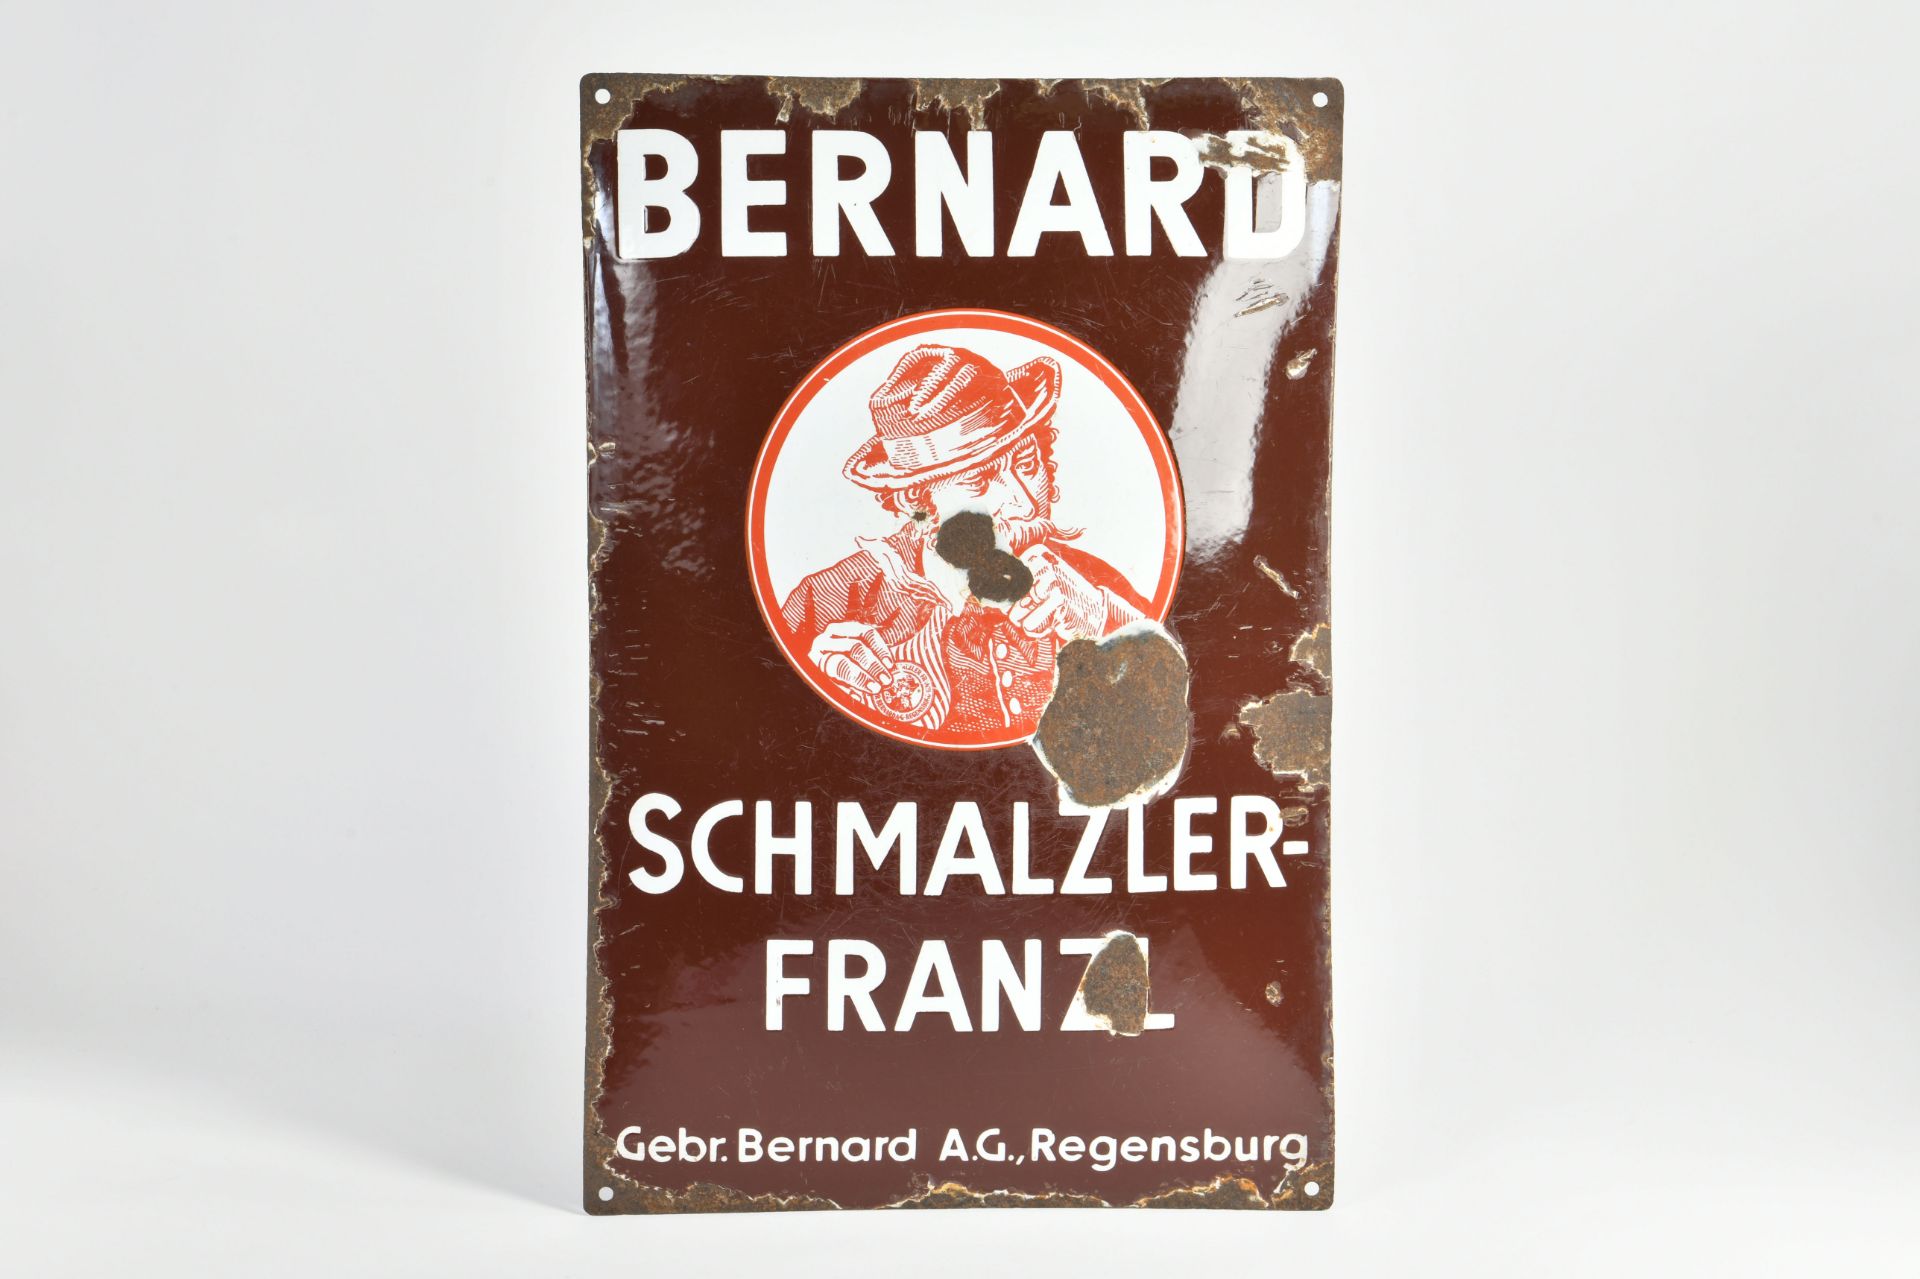 Bernard Schmalzler Franzl Regensburg, enamel sign, 60x40 cm, paint d., C 3